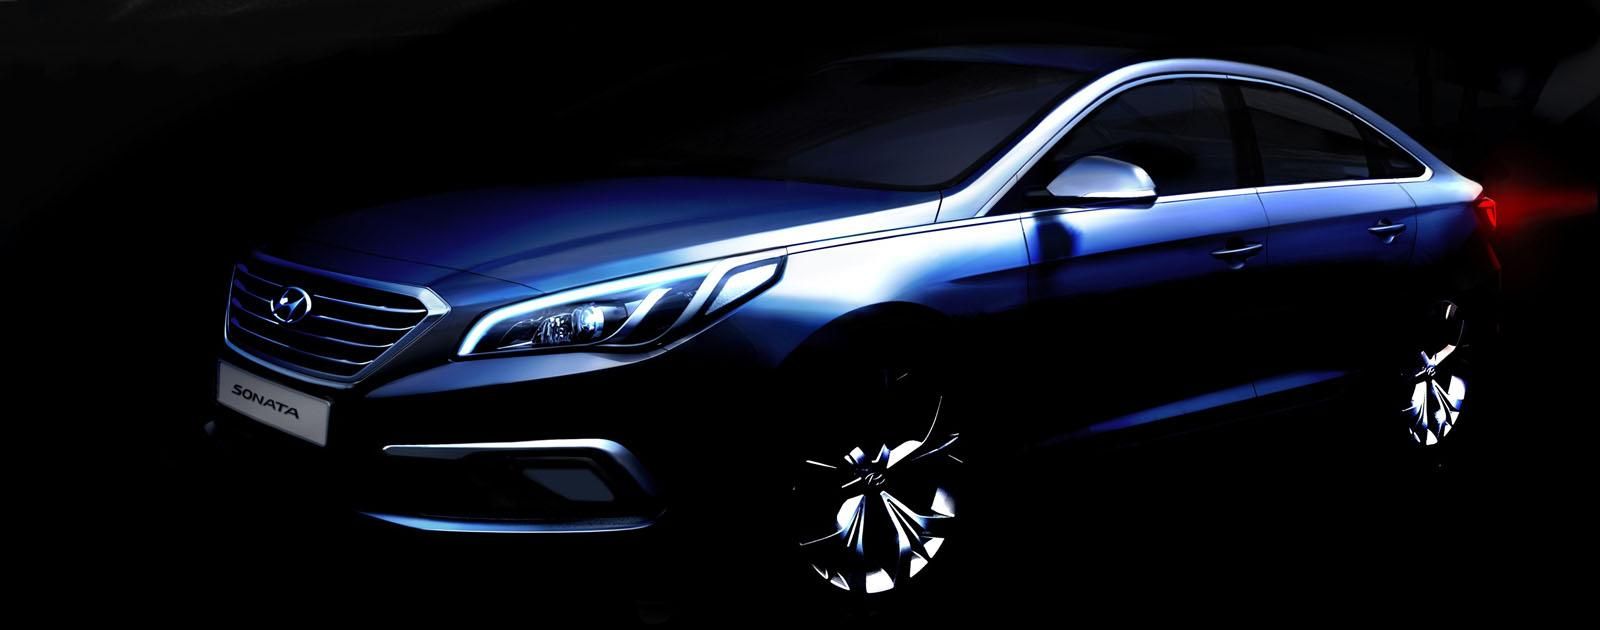 Hyundai teases 2015 Sonata ahead of 2014 New York Motor Show preview